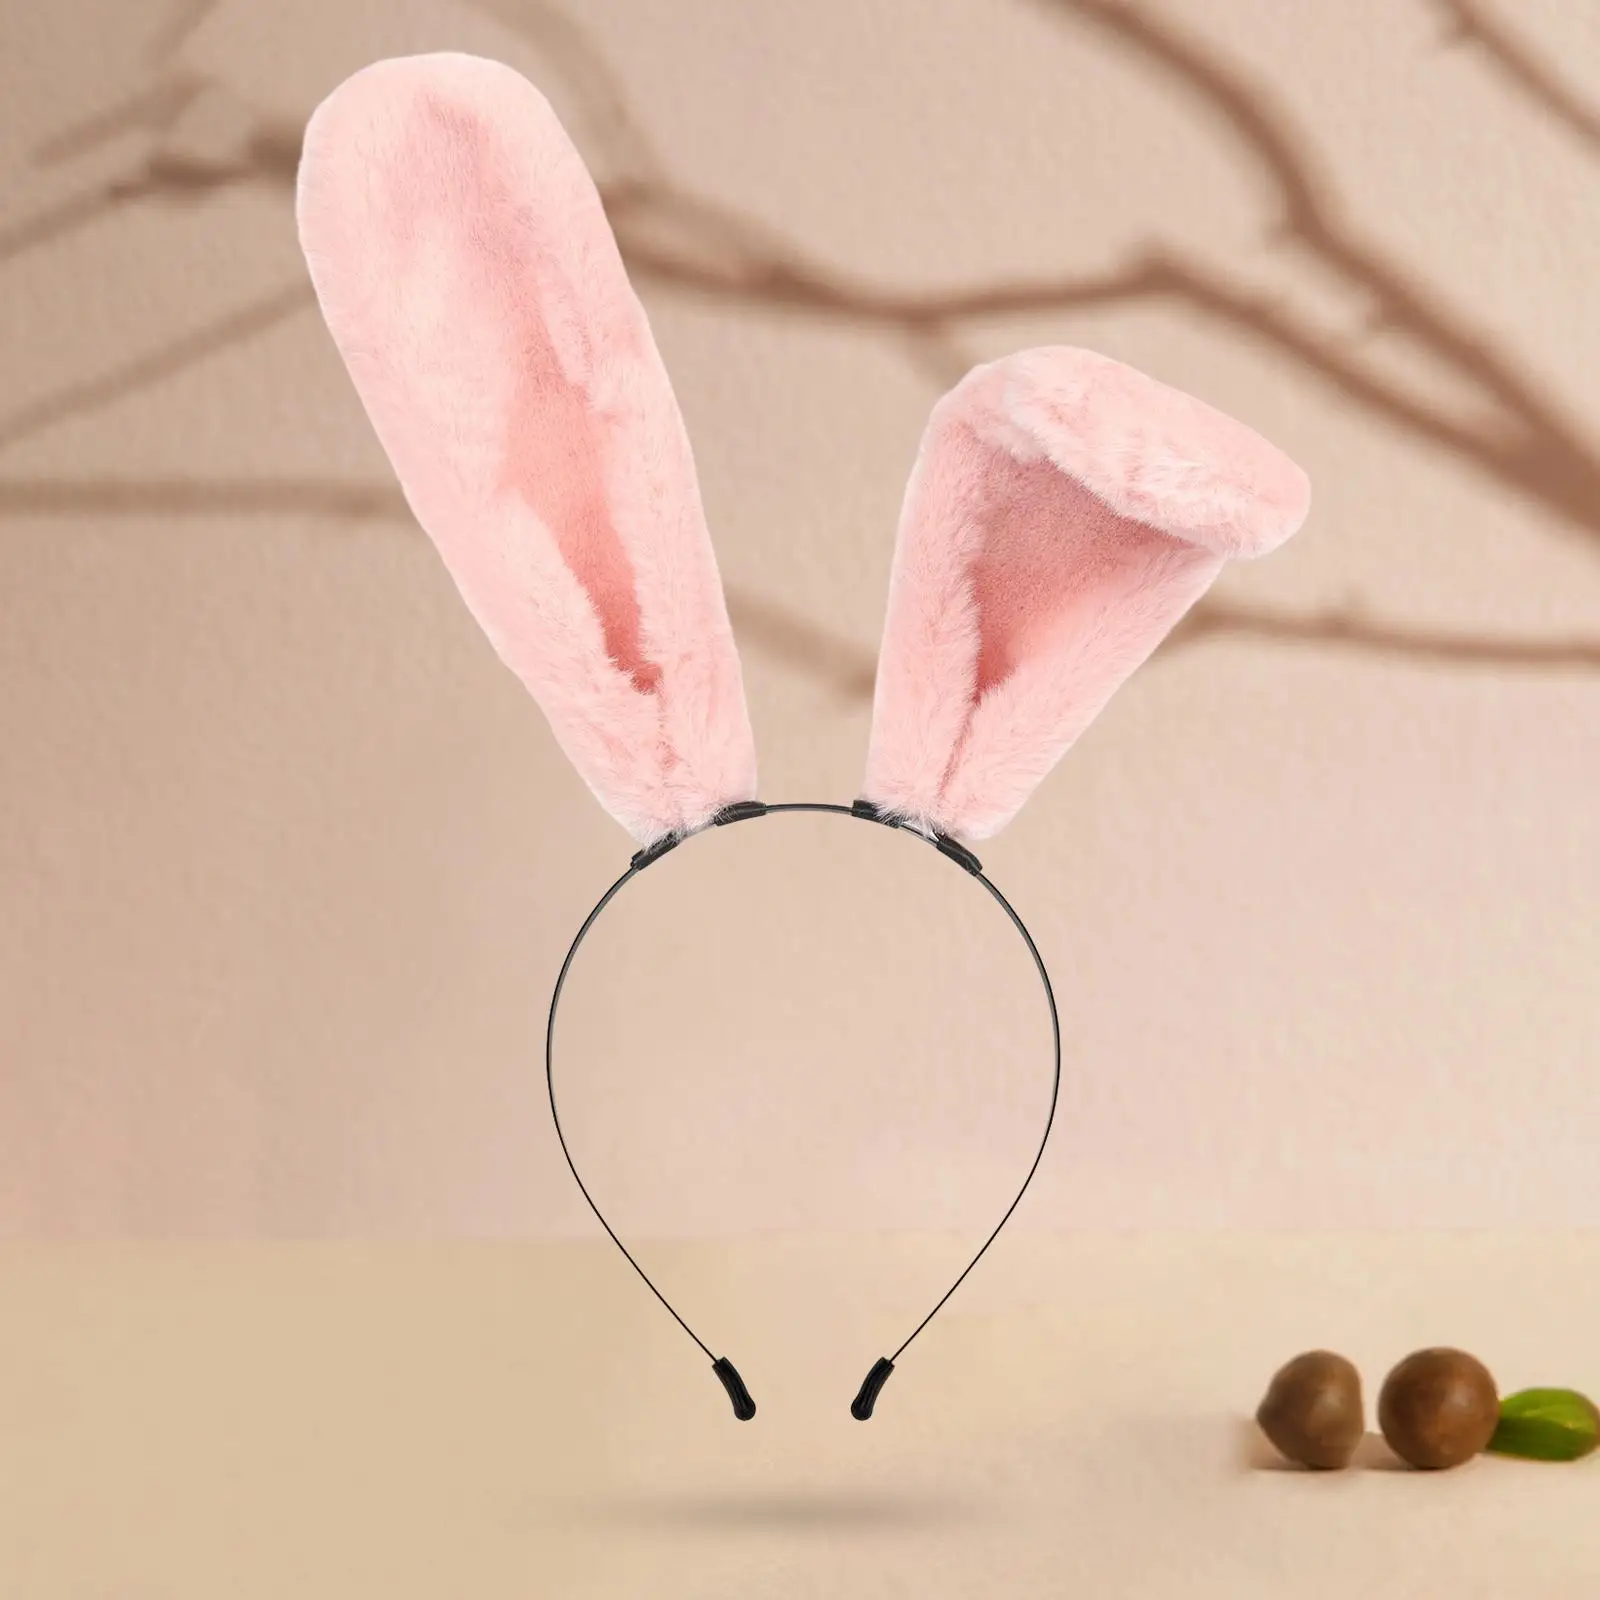 Plush Long Bunny Ears Headband Hair Accessories Headwear Animal Ears Hair Hoop for Party Easter Dress up Photo Props